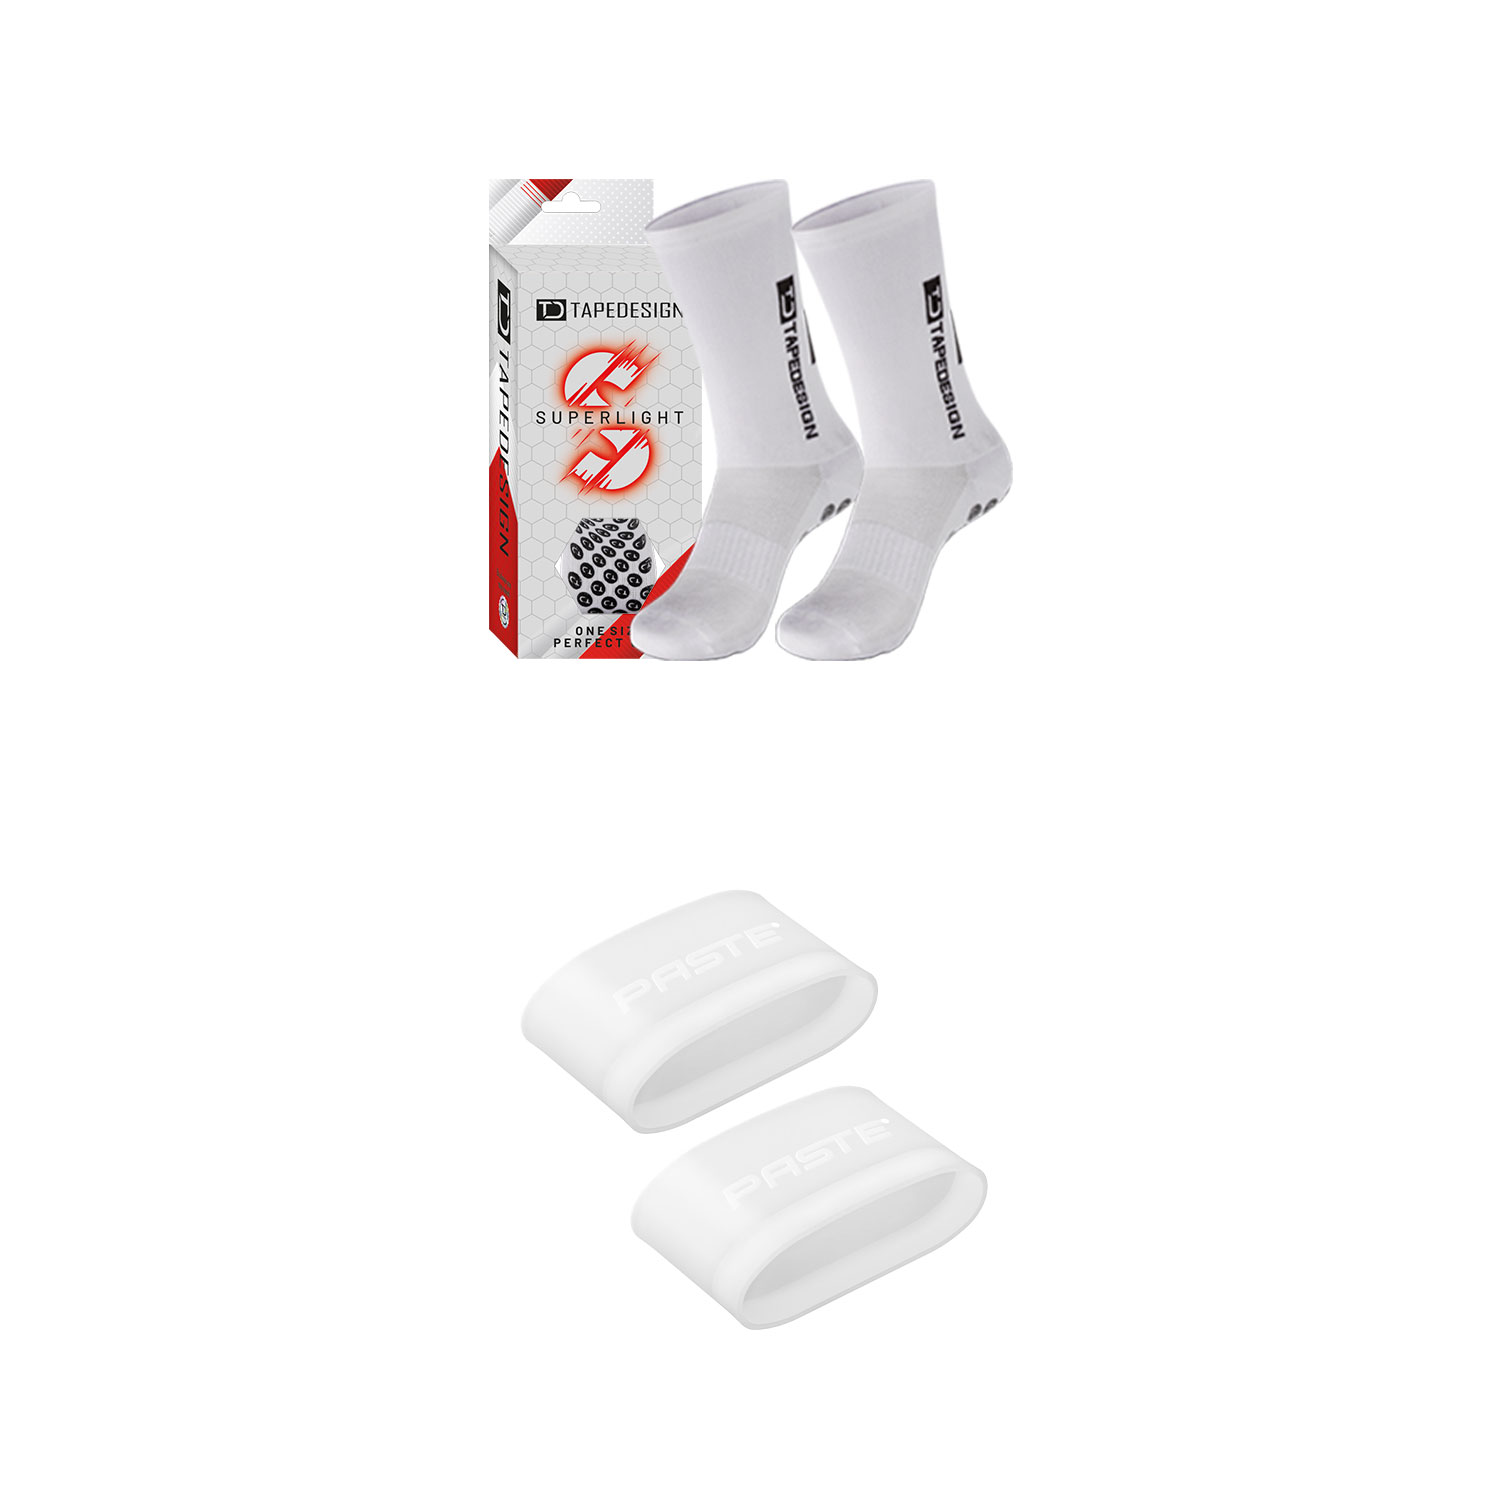 Tape Design Grip Socks - Suitable For Football, Basketball